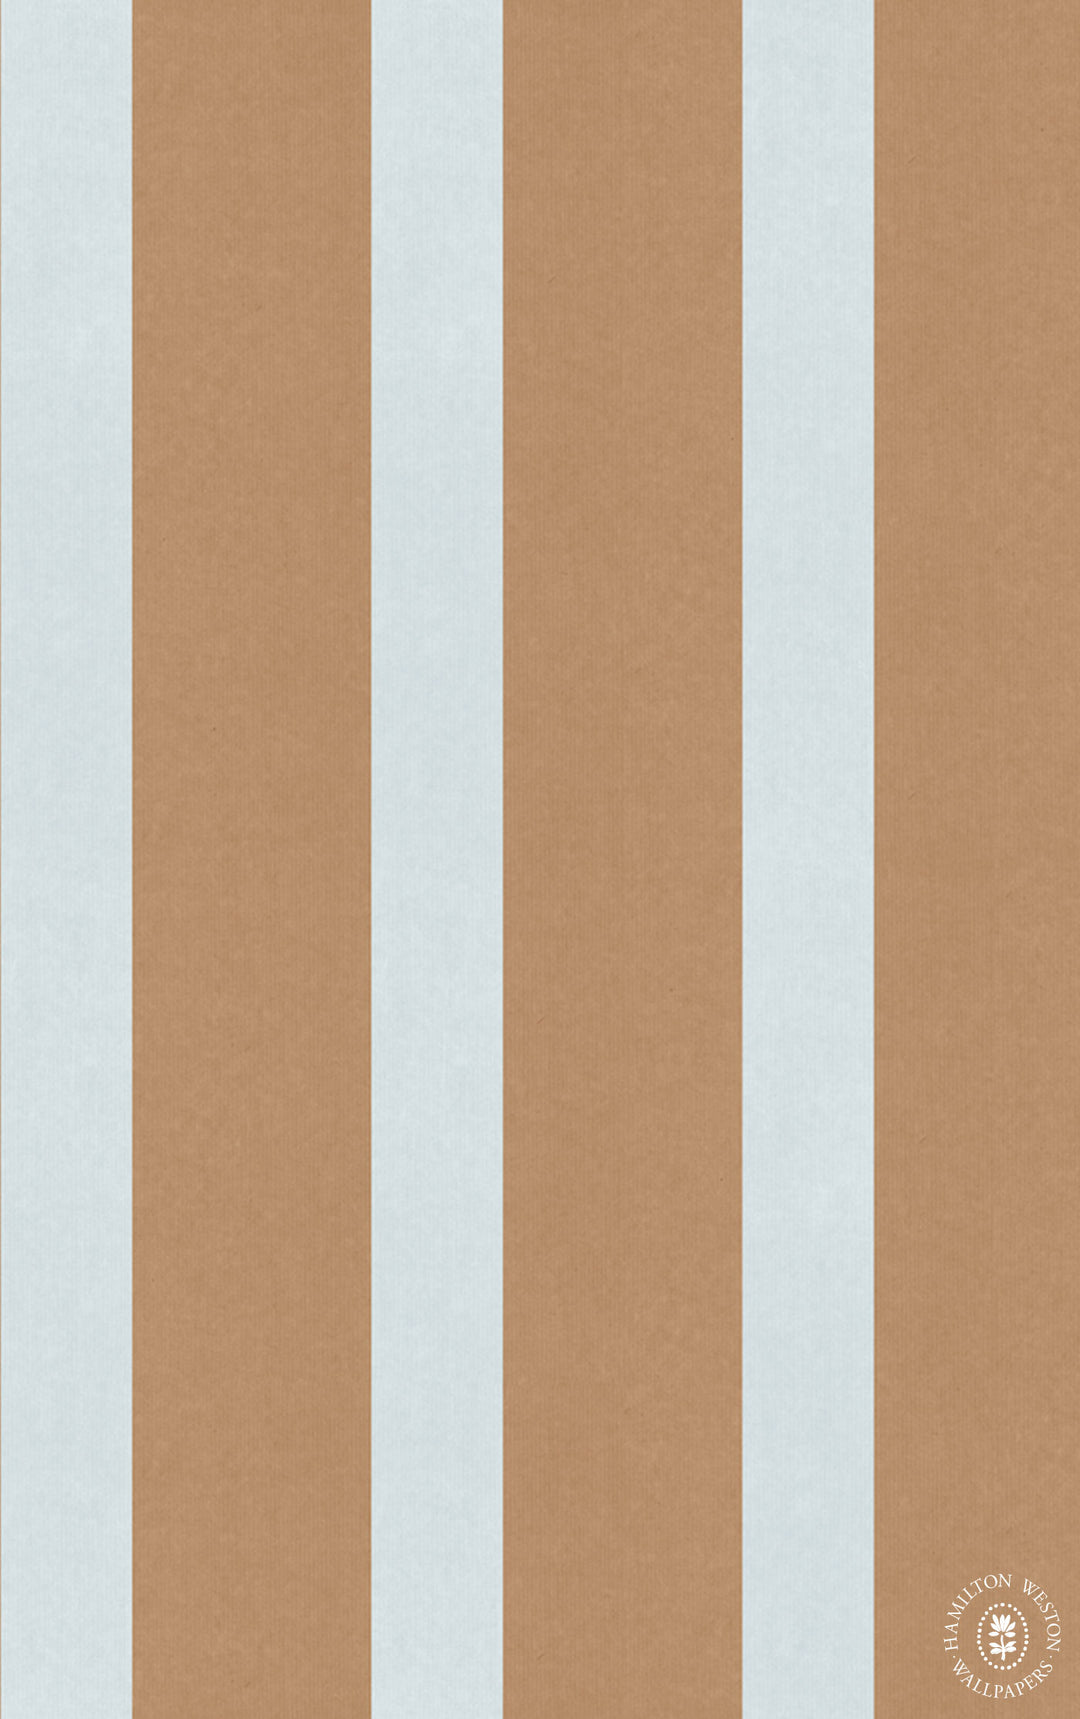 Hamilton-weston-wallpaper-adam-bray-brown-paper-stripe-collection-brown-stripe-wallpaper-british-collaboration-powder-blue-07